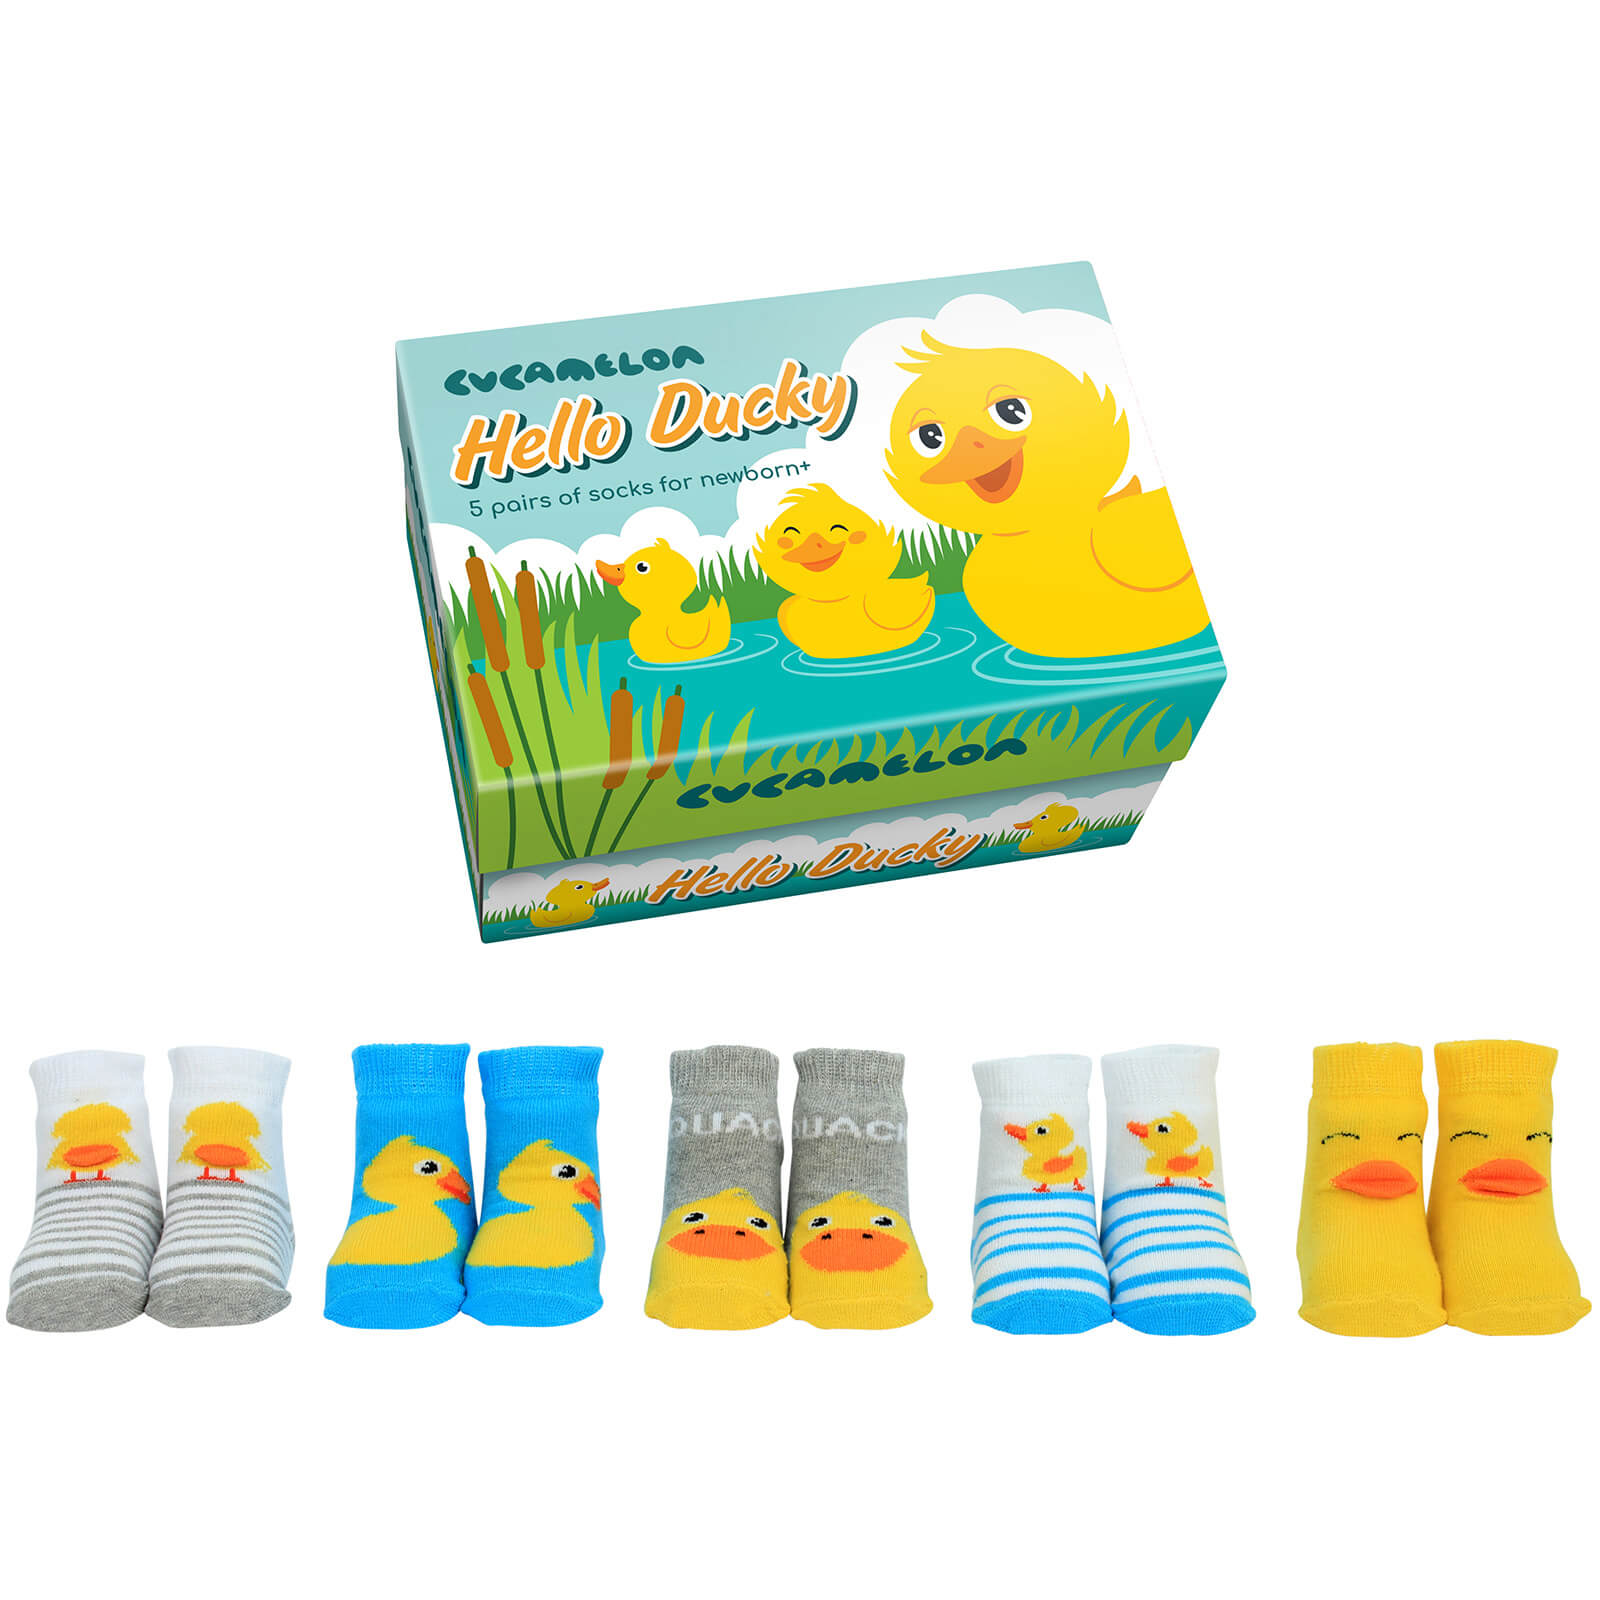 Socks Gift Box Newborn Hello Ducky